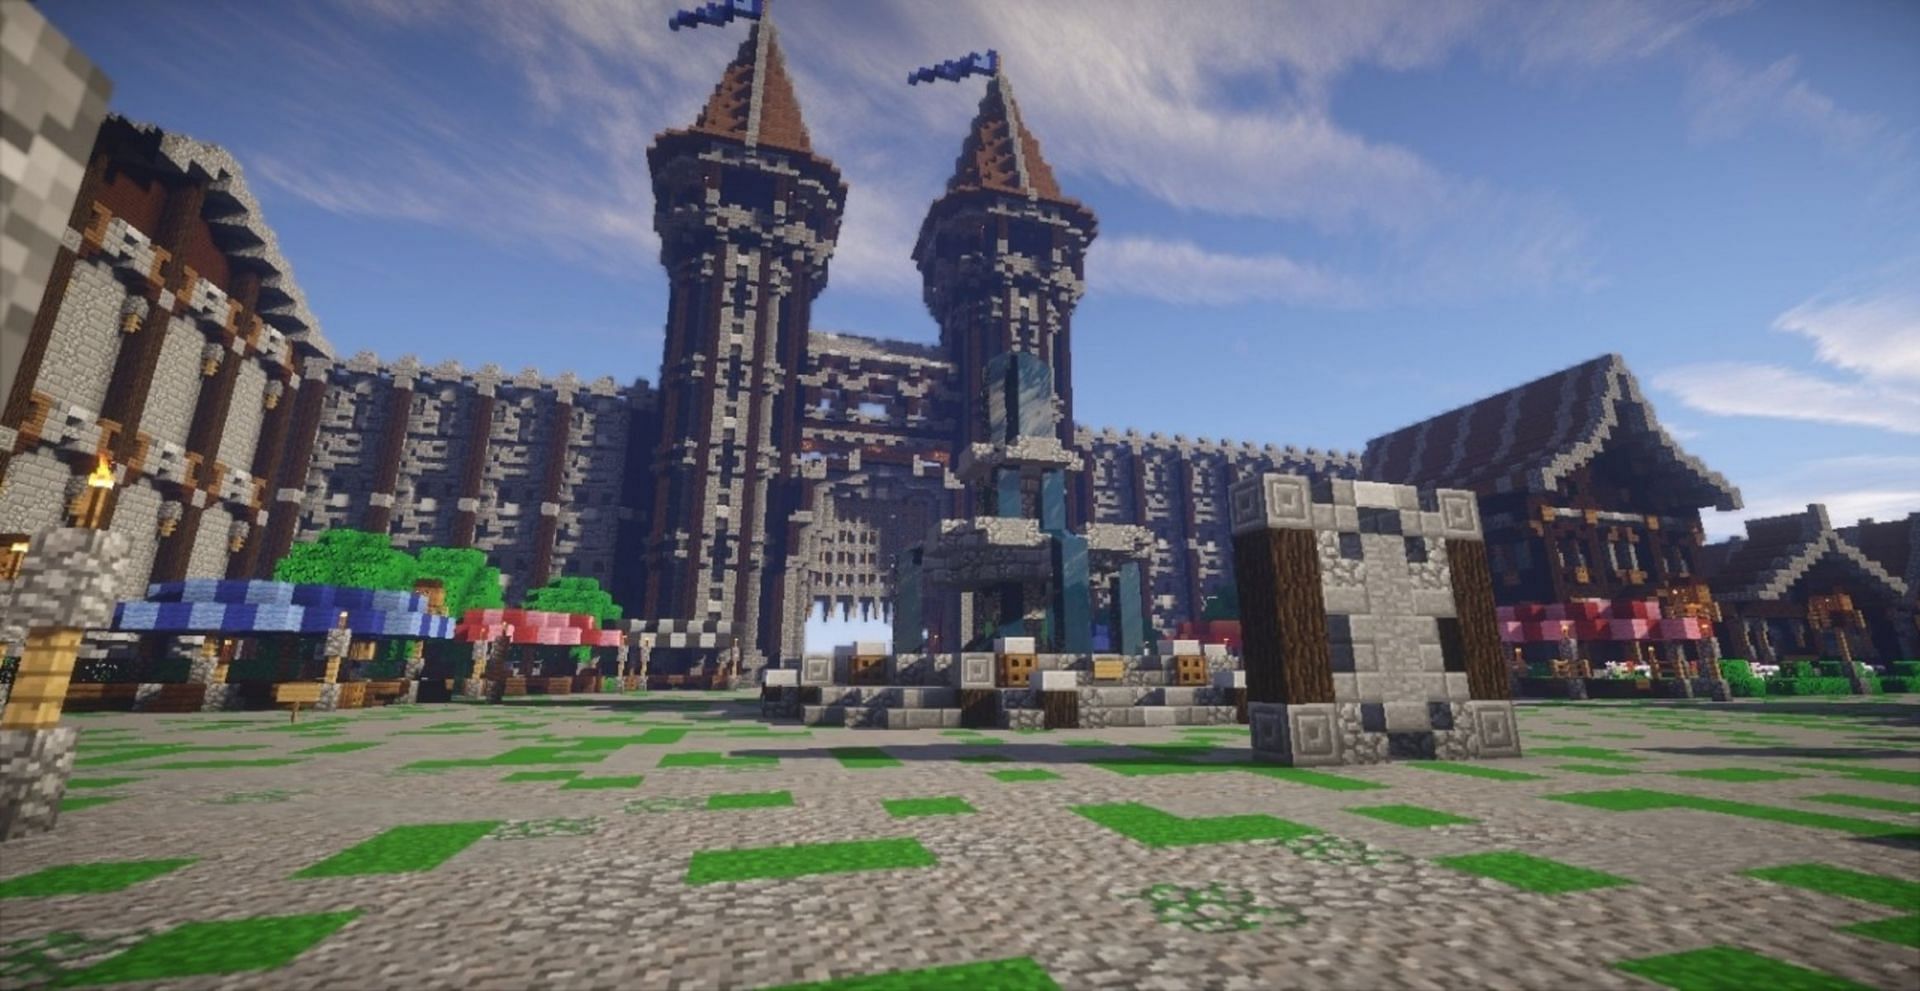 A central market square (Image via Planet Minecraft/PanteLegacy)